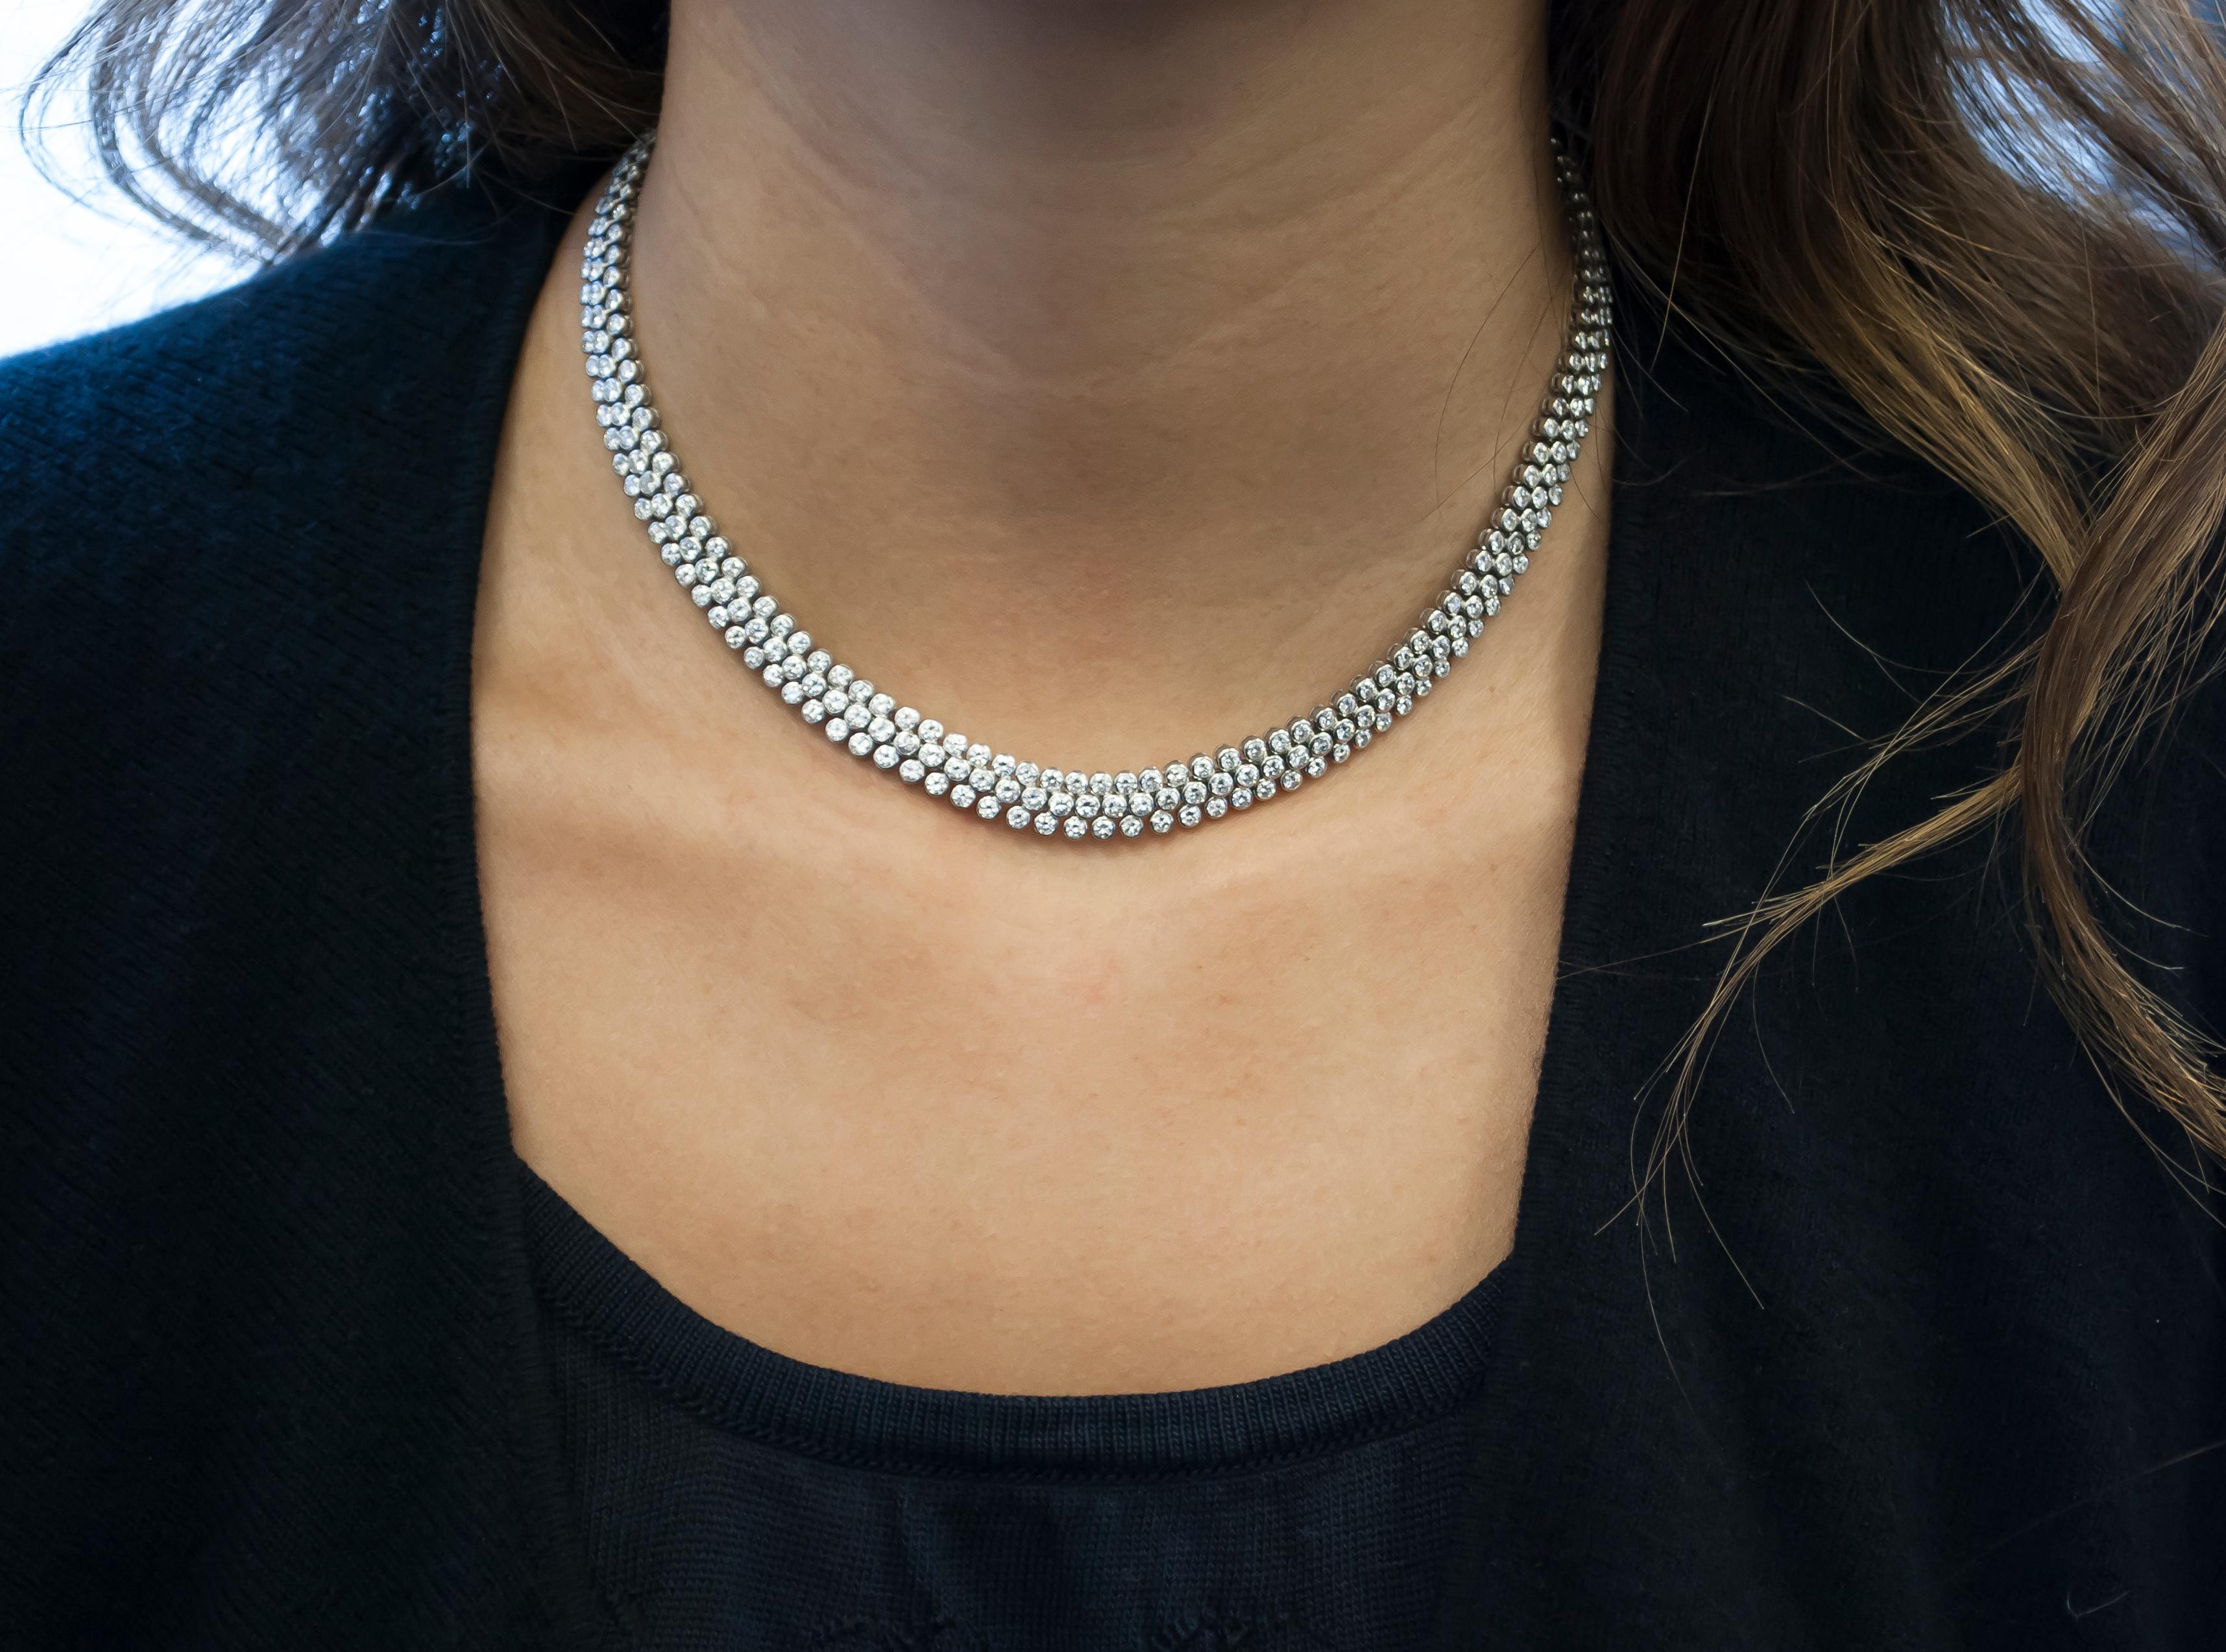 platnium necklace